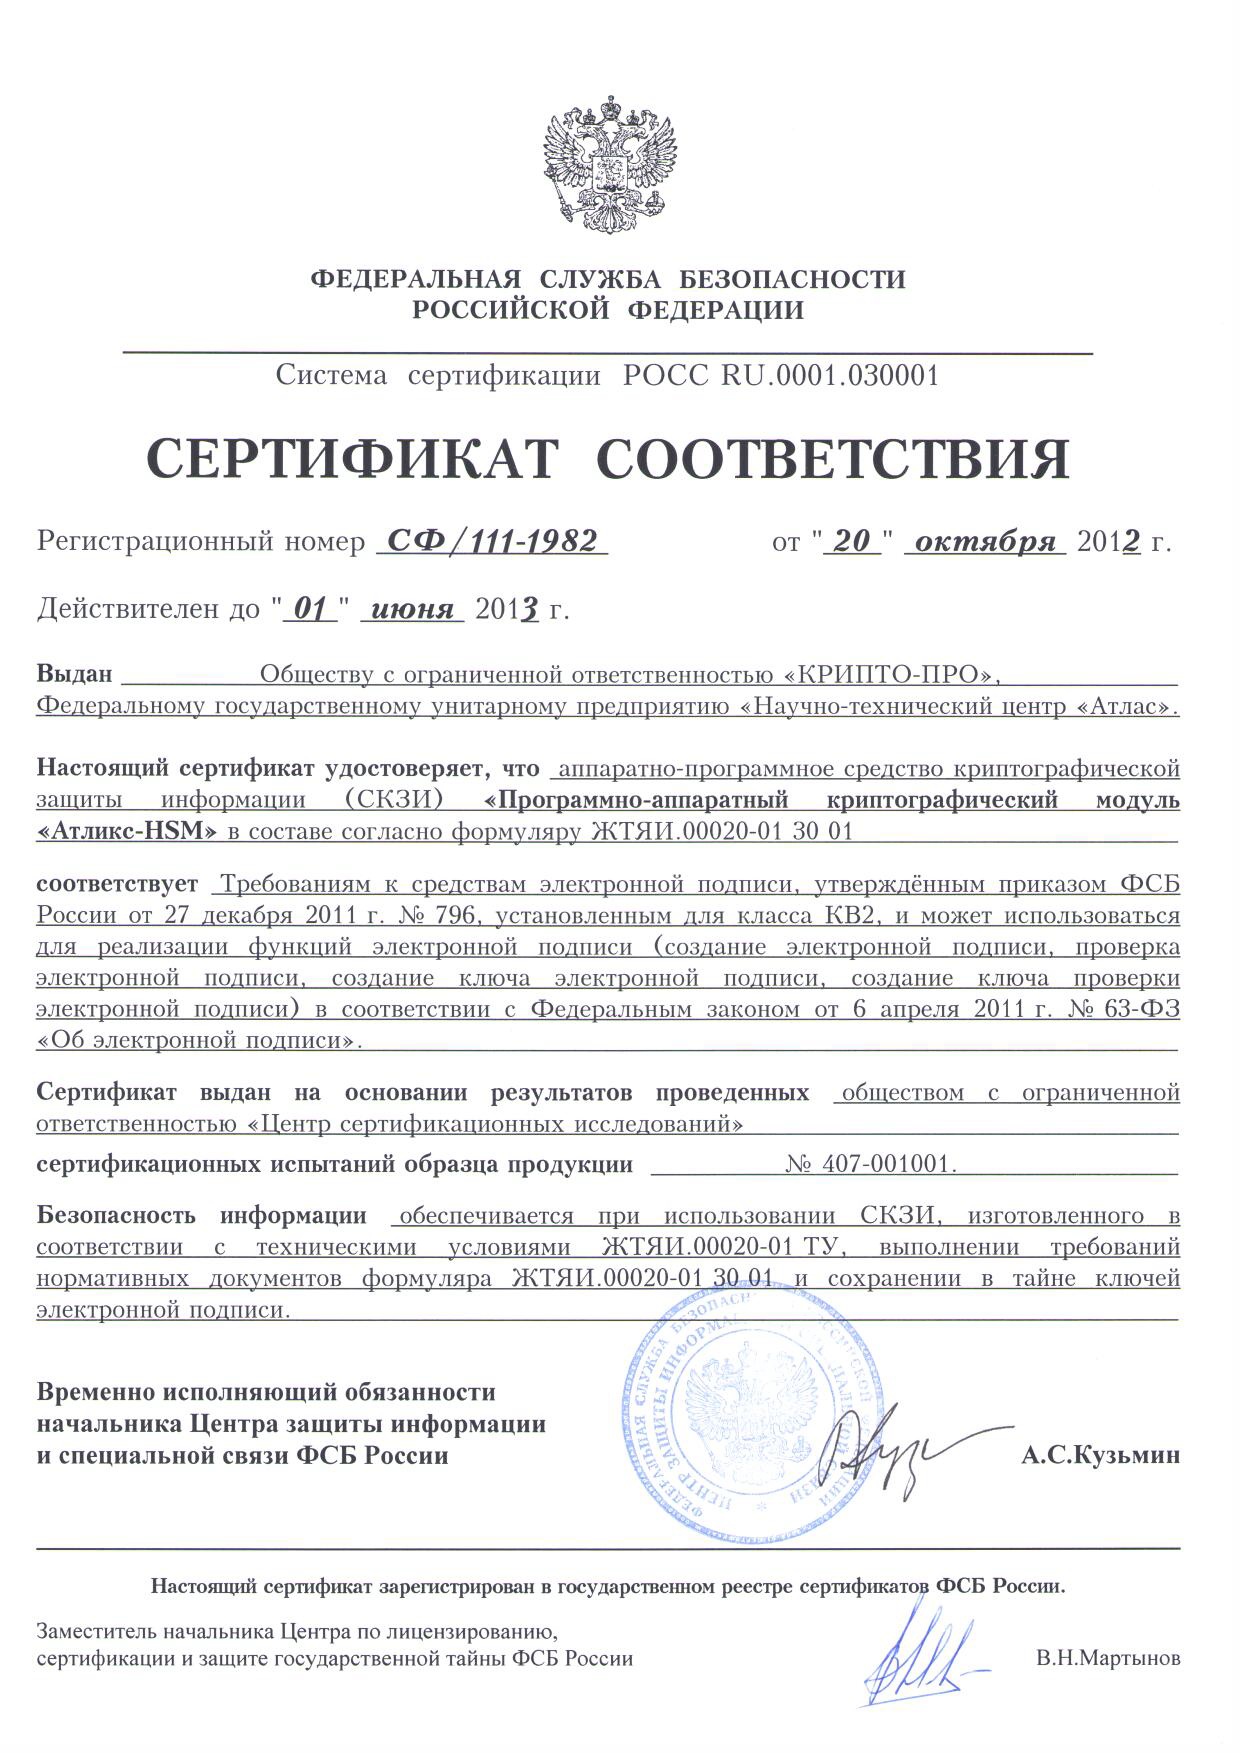 Сертификат средств защиты информации. Сертификат соответствия СФ/СЗИ-0147. СФ/124-4062.